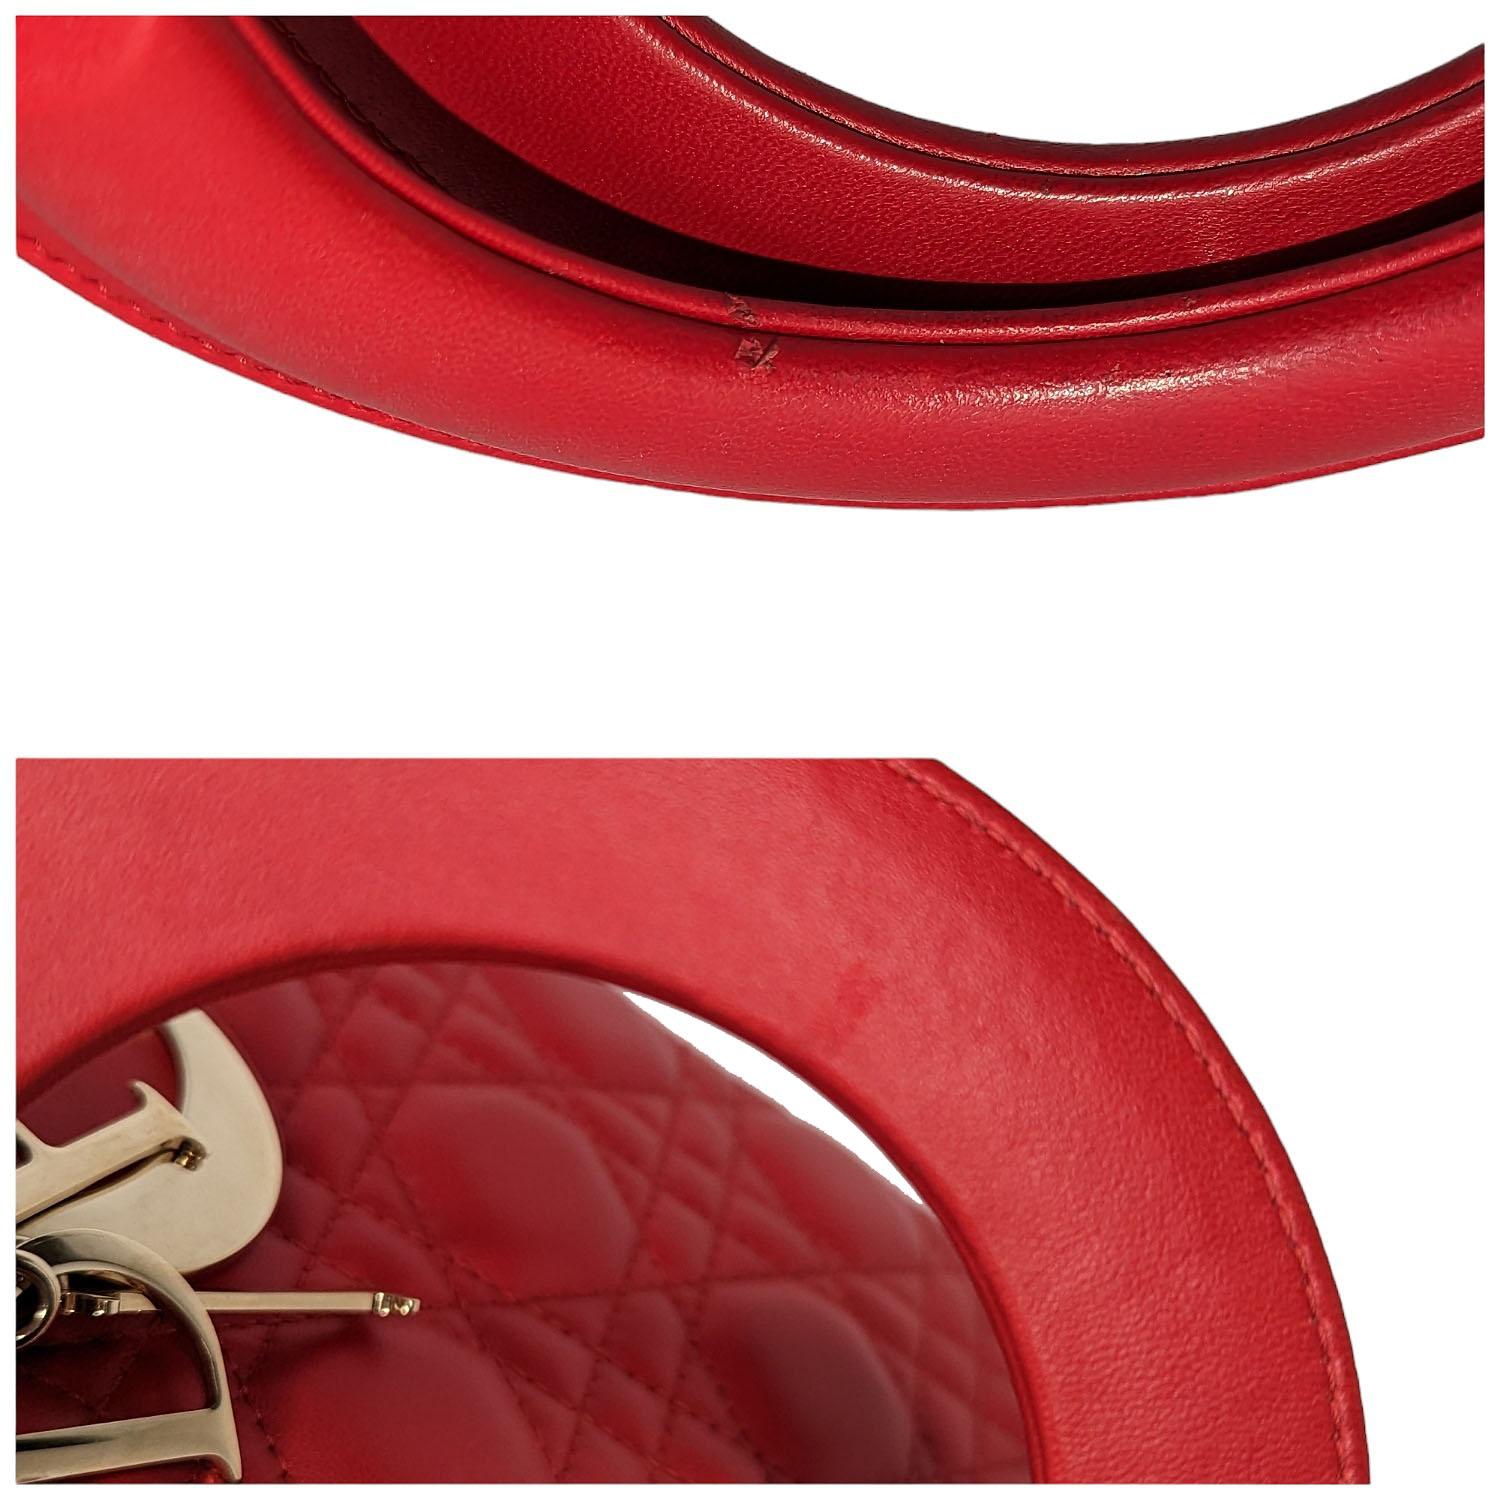 Christian Dior - Petit sac Lady Dior en cuir d'agneau cannage rouge 4